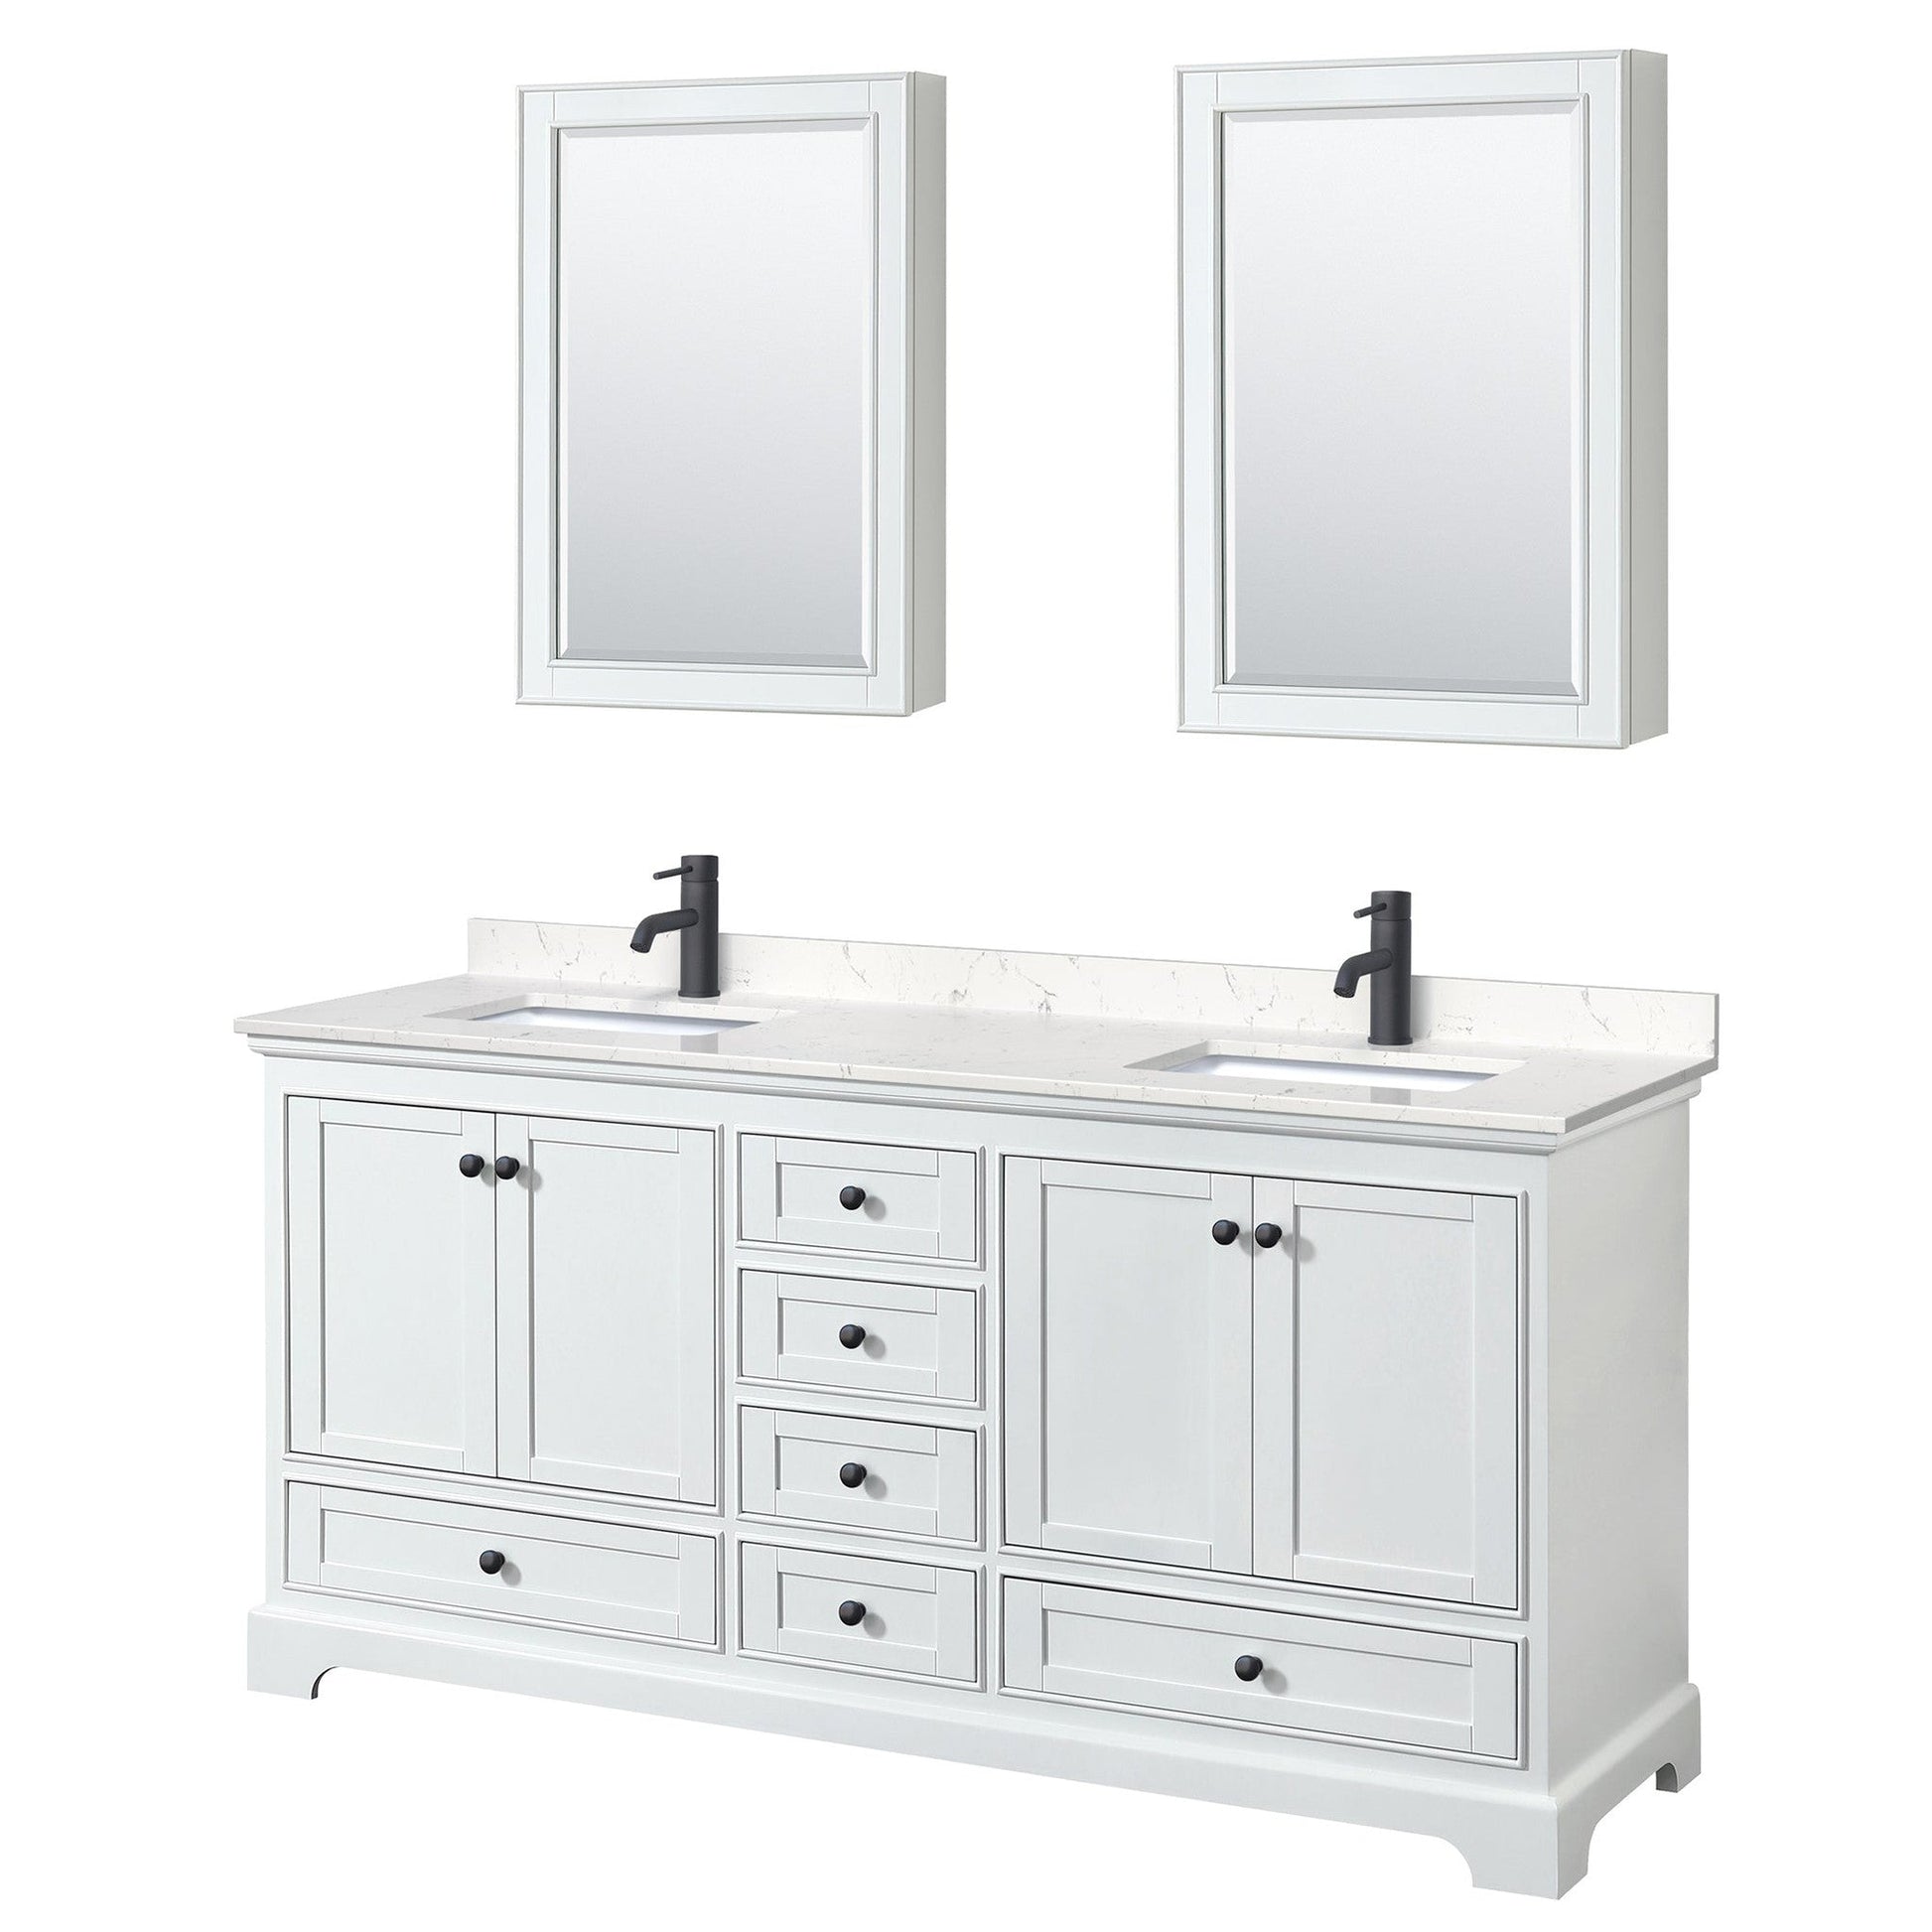 Deborah 72" Double Bathroom Vanity in White, Carrara Cultured Marble Countertop, Undermount Square Sinks, Matte Black Trim, Medicine Cabinets